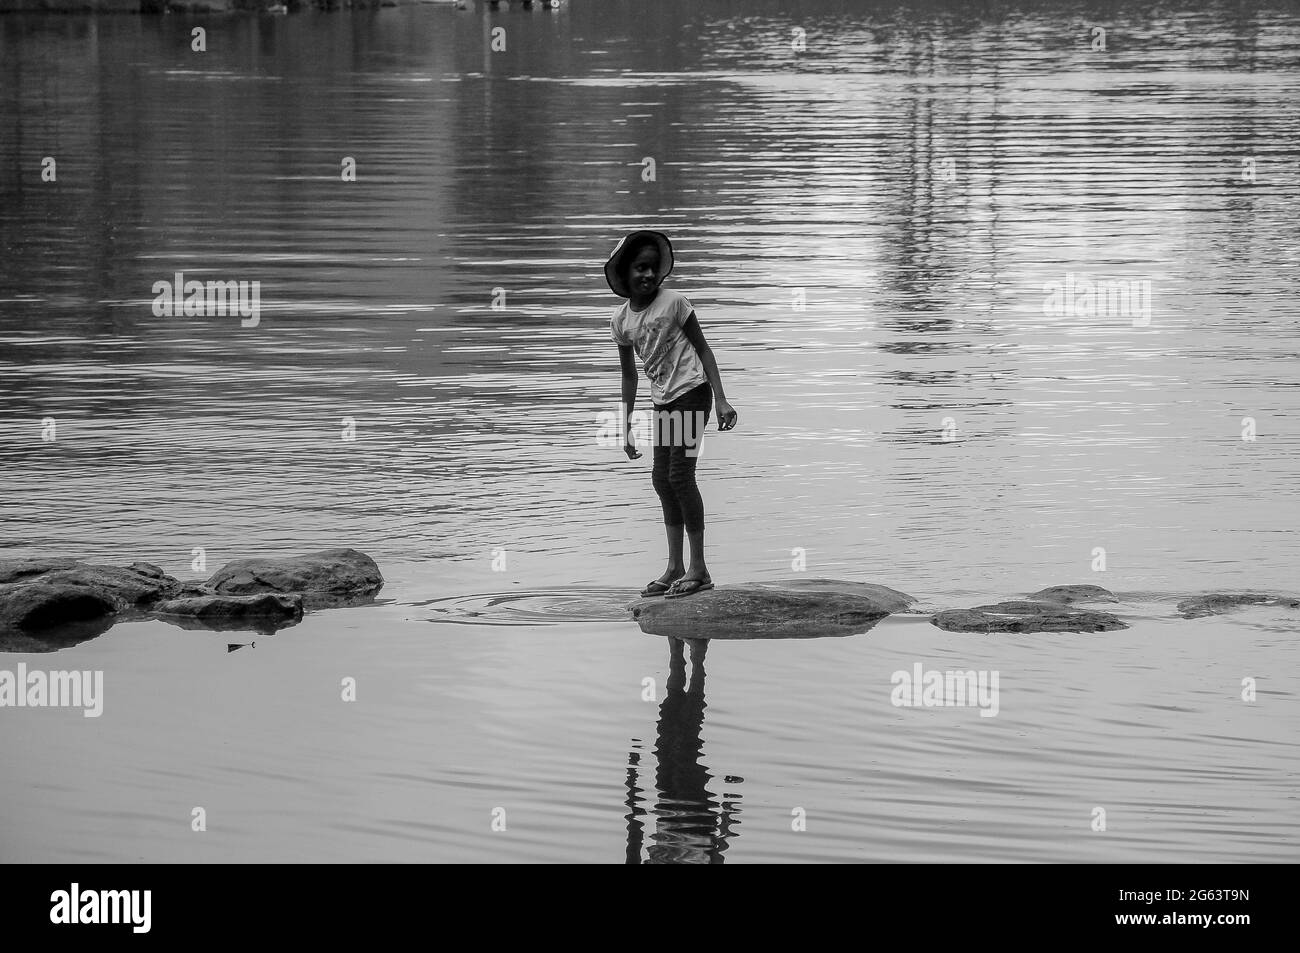 Ein Kind geht am Flussufer entlang in sembuwaththa sri lanka. Schwarzweiß-Bild Stockfoto